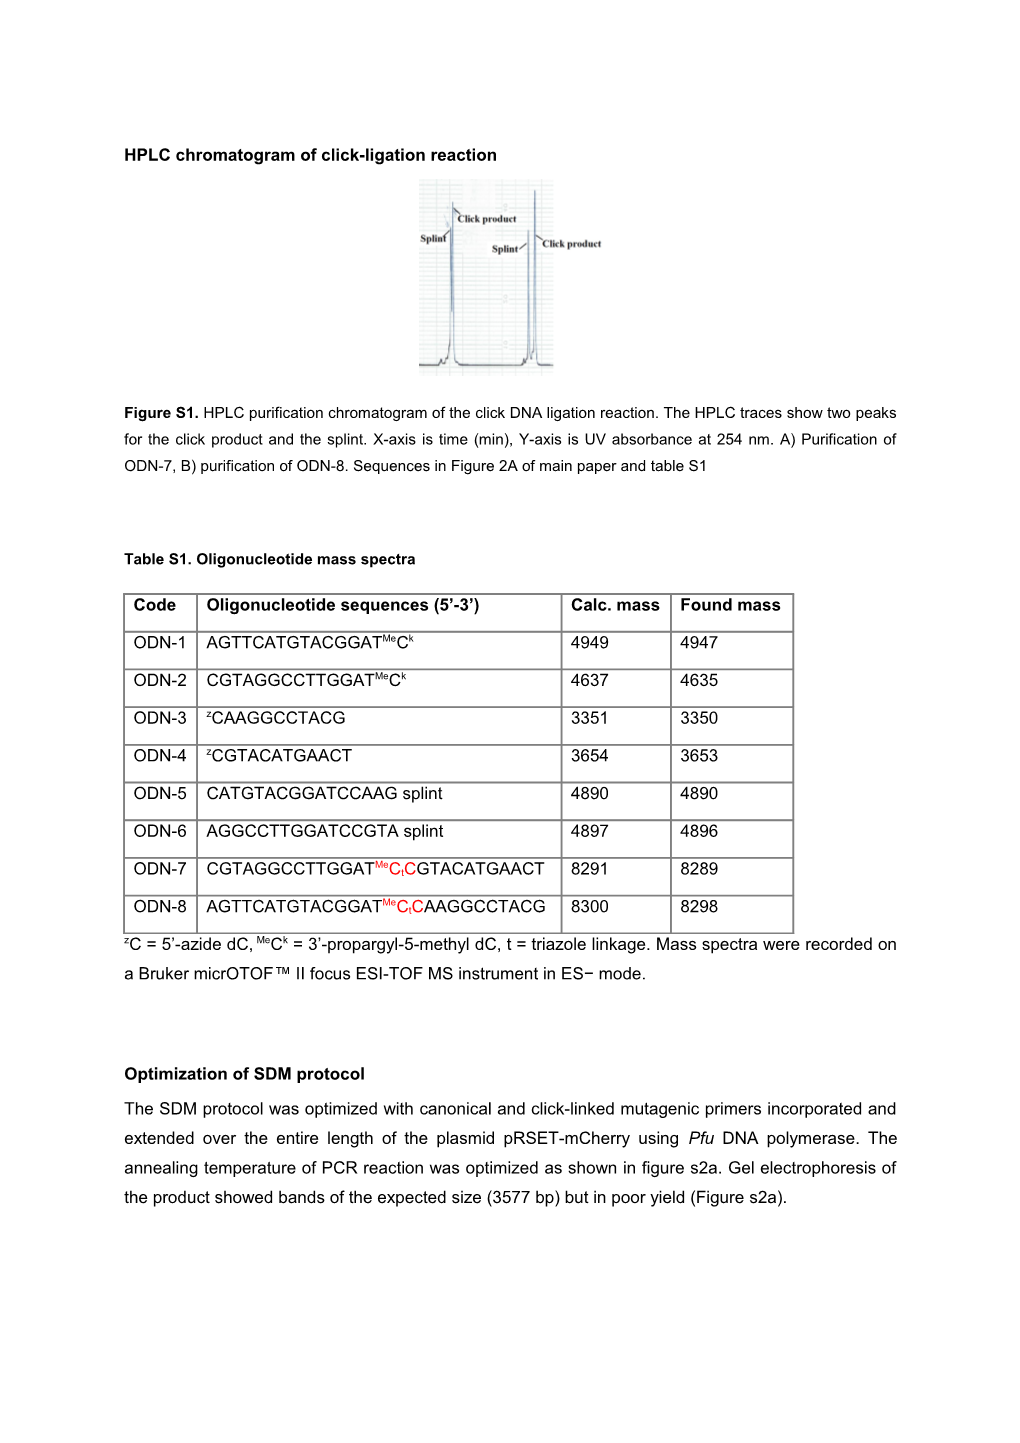 HPLC Chromatogramof Click-Ligation Reaction